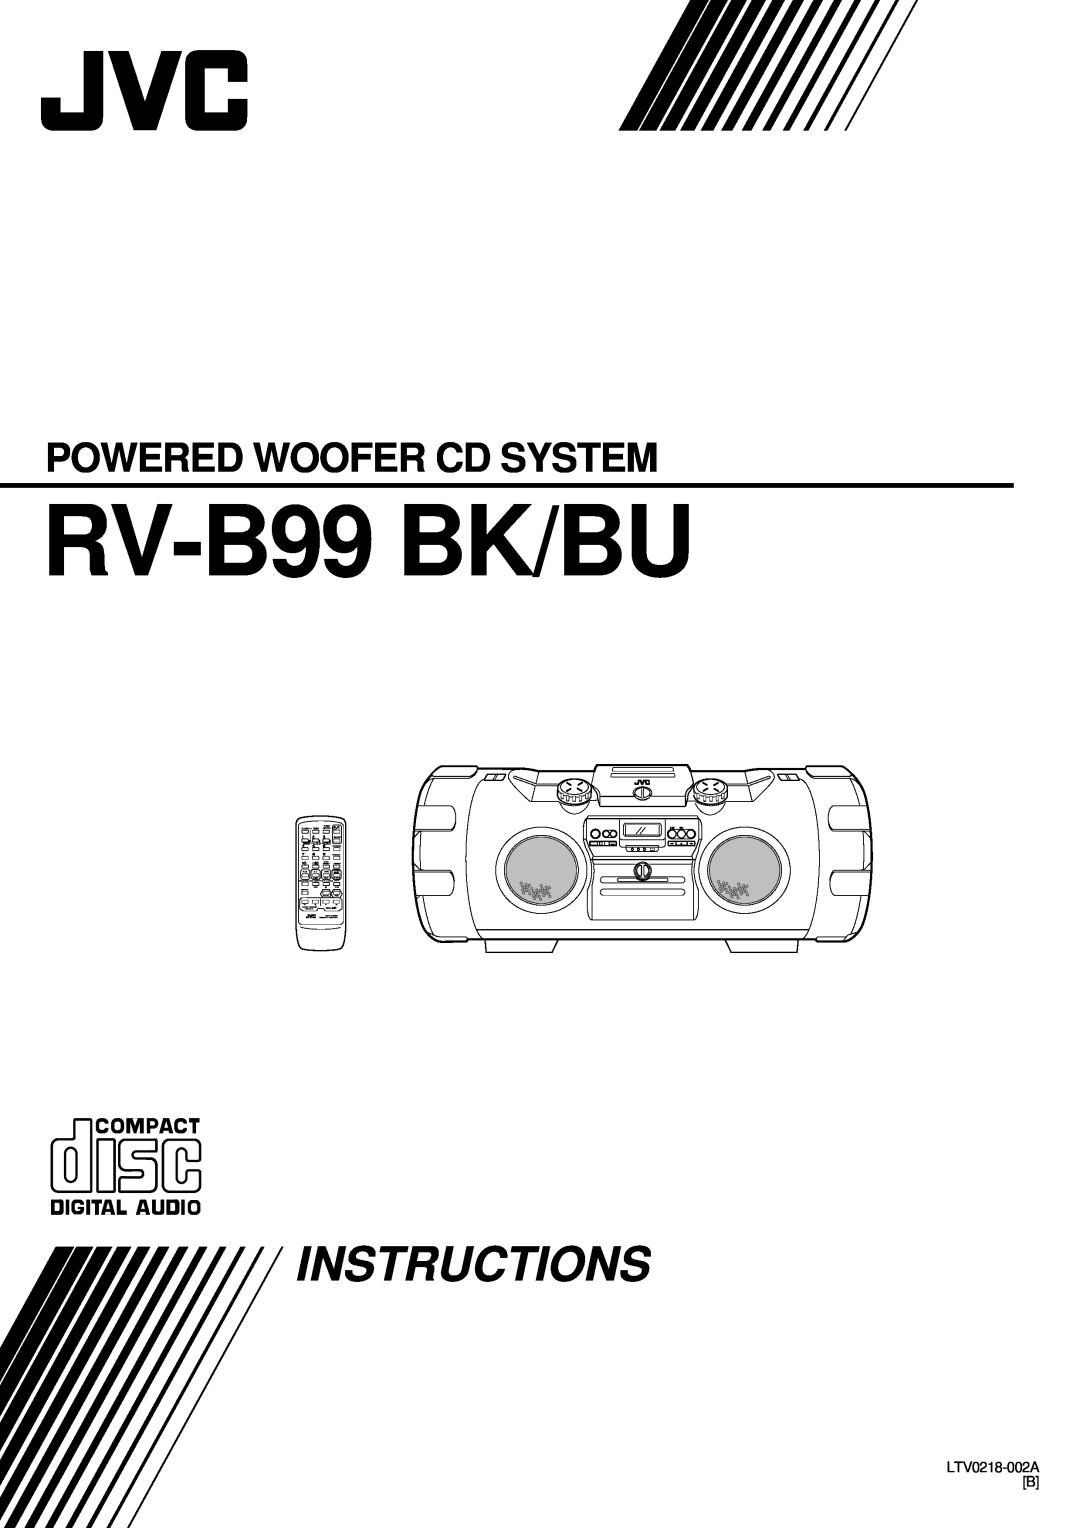 JVC RV-B99 BK/BU manual RV-B99BK/BU, Instructions, Powered Woofer Cd System, Sleep, Volume, Timer Clock Timer On/Off, Tape 